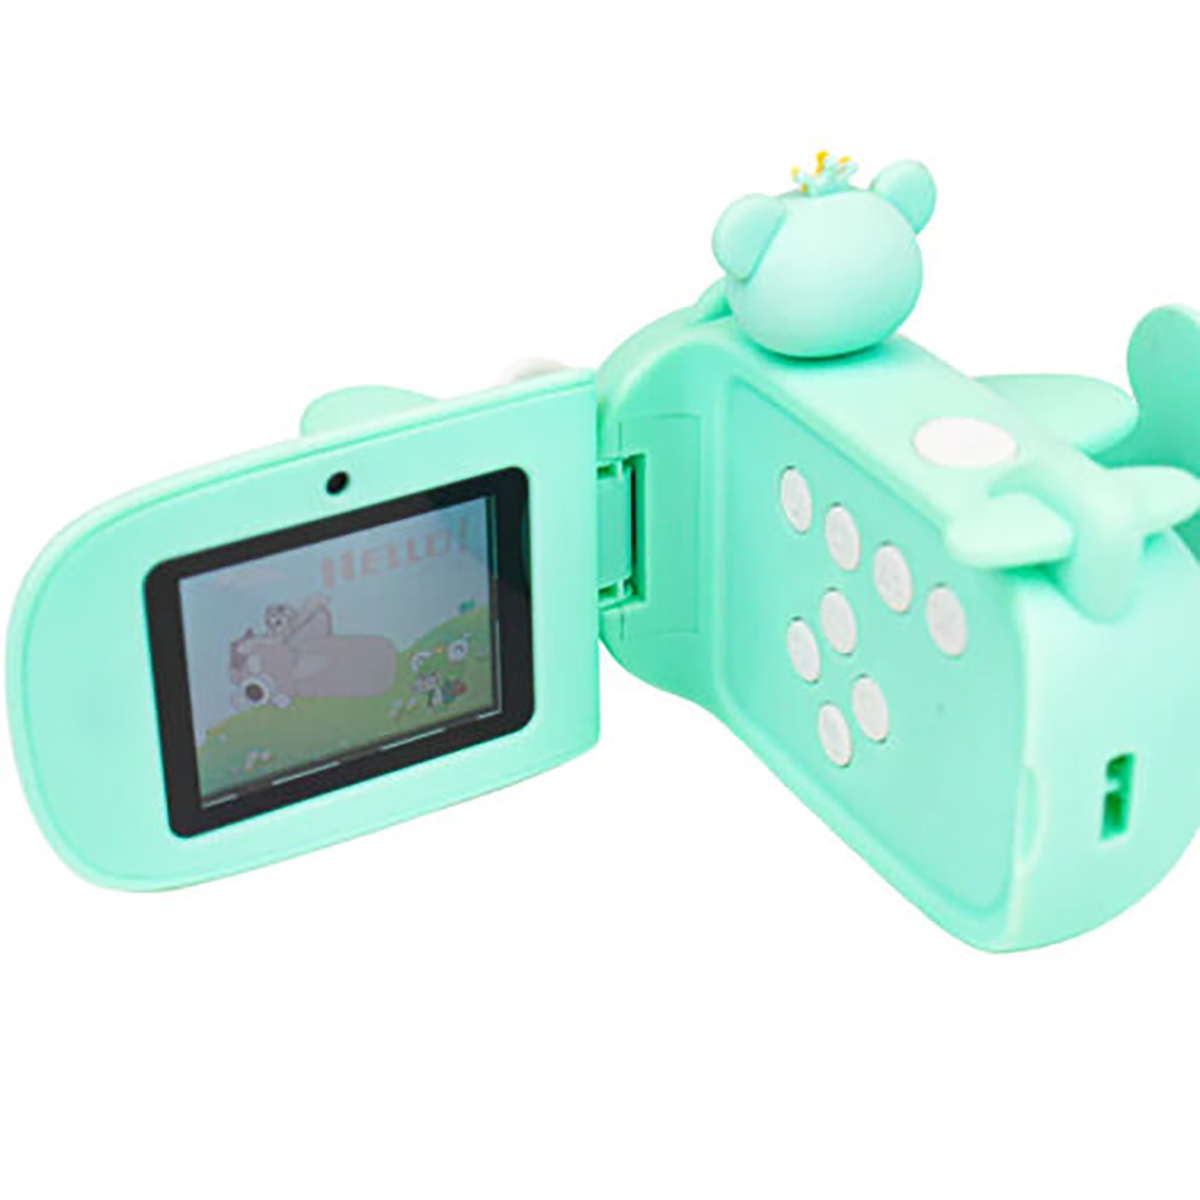 Digitalkamera Karte Kinder LINGDA 32GB Spielzeug 1080p 50MP SD grüner U-Boot mit Kinderkamera